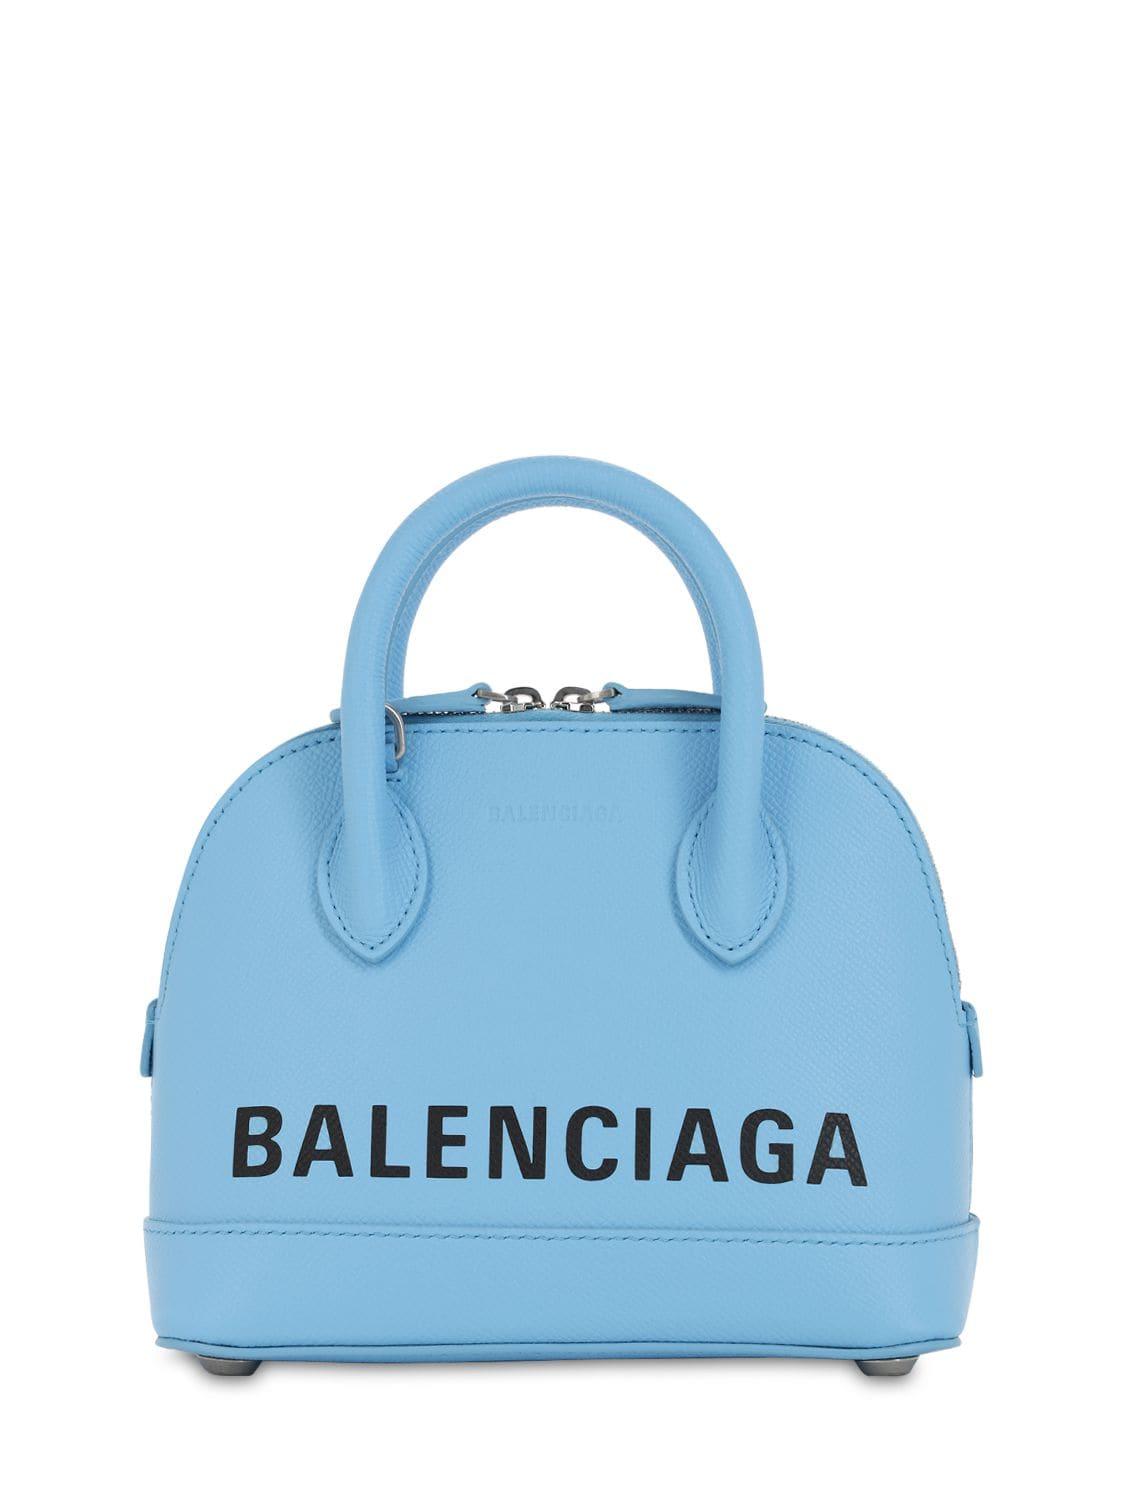 Balenciaga Xxs Ville Leather Top Handle Bag in Light Blue (Blue) | Lyst